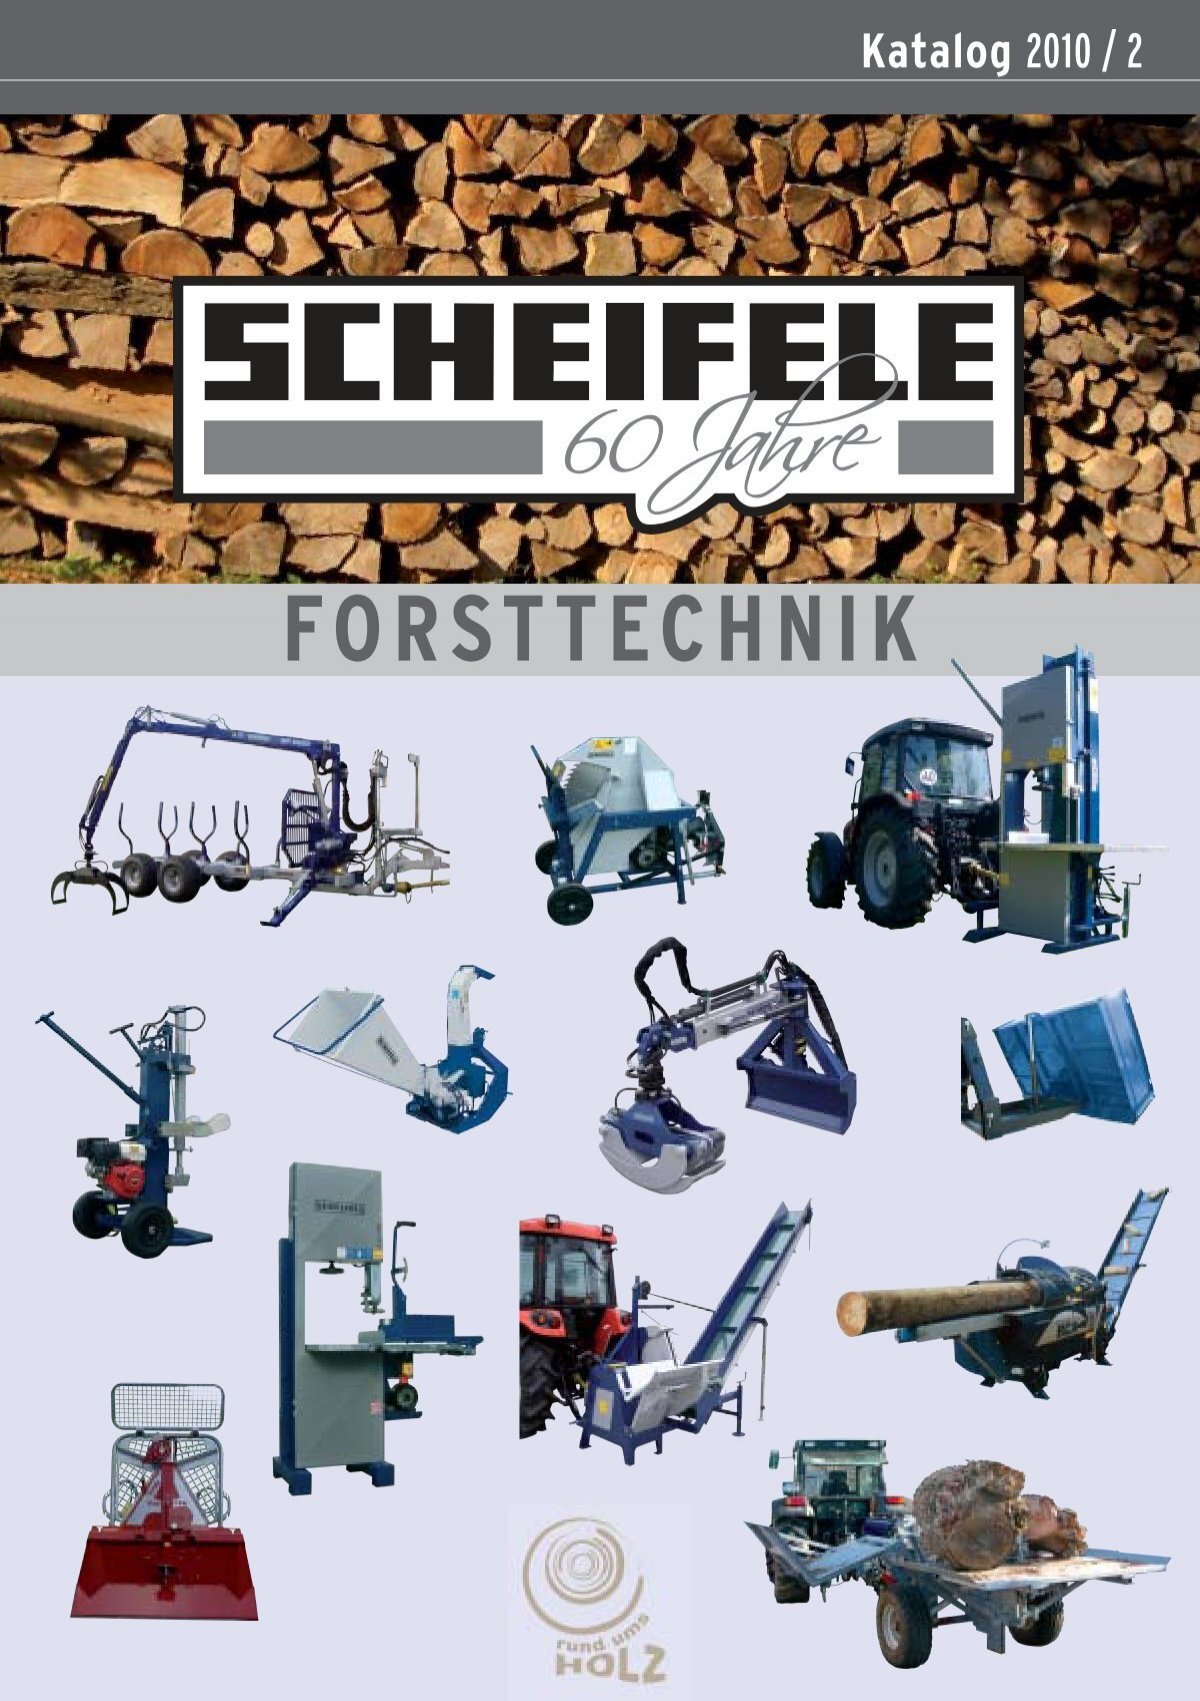 Umlenkrolle - Scheifele GmbH - Forsttechnik